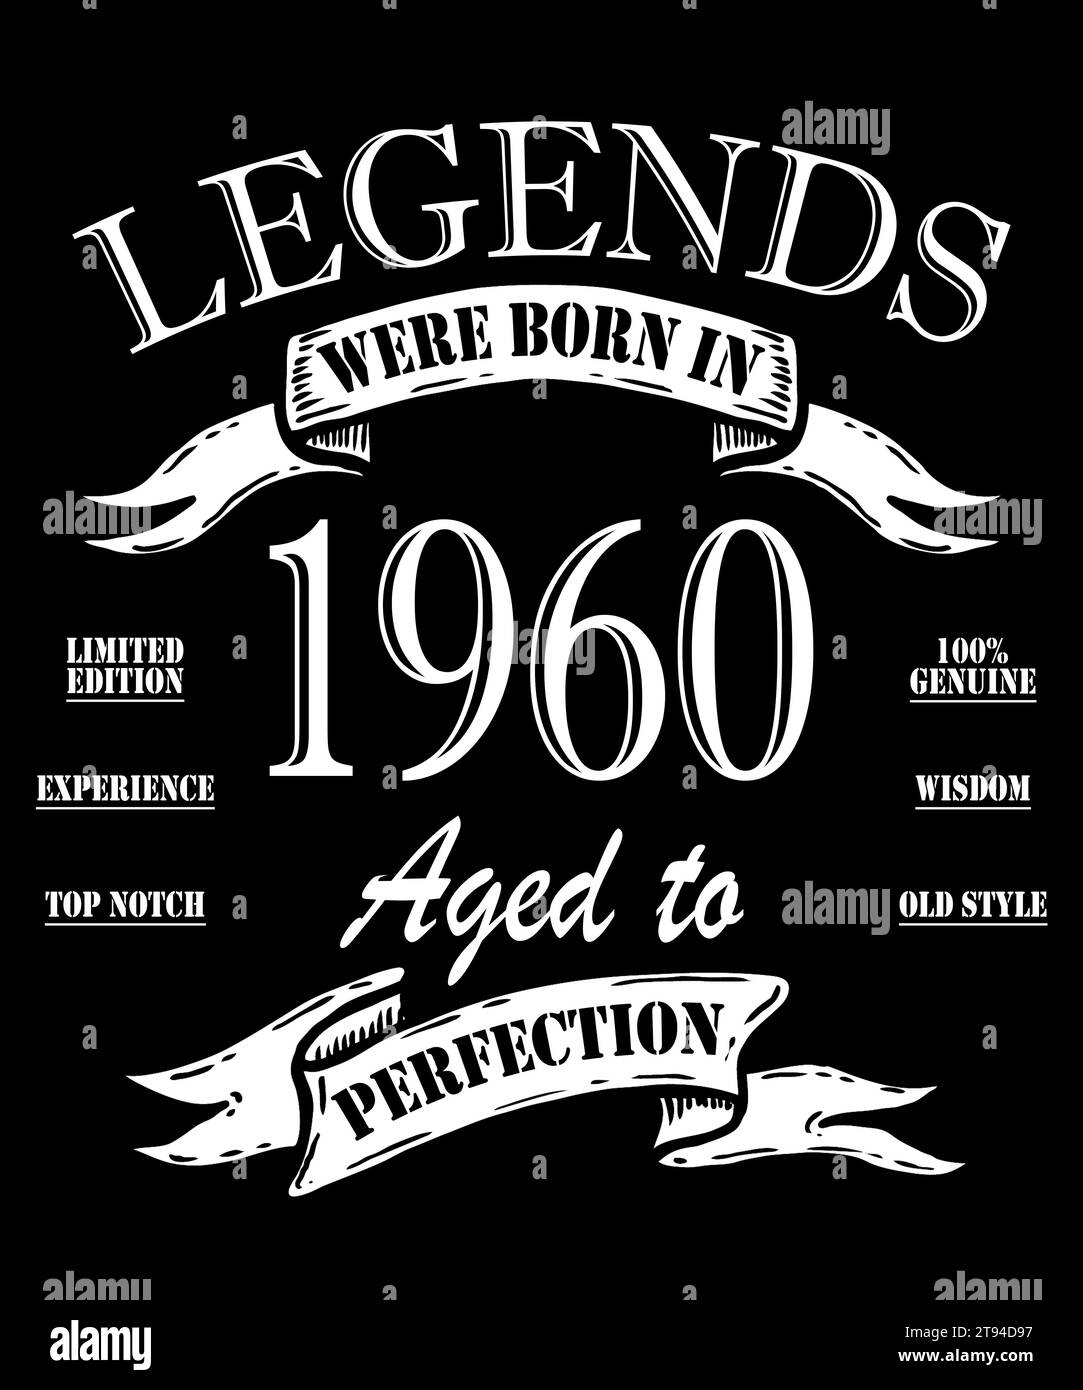 The year 1960 Legends were Born, Vintage 1960 birthday. Stock Photo